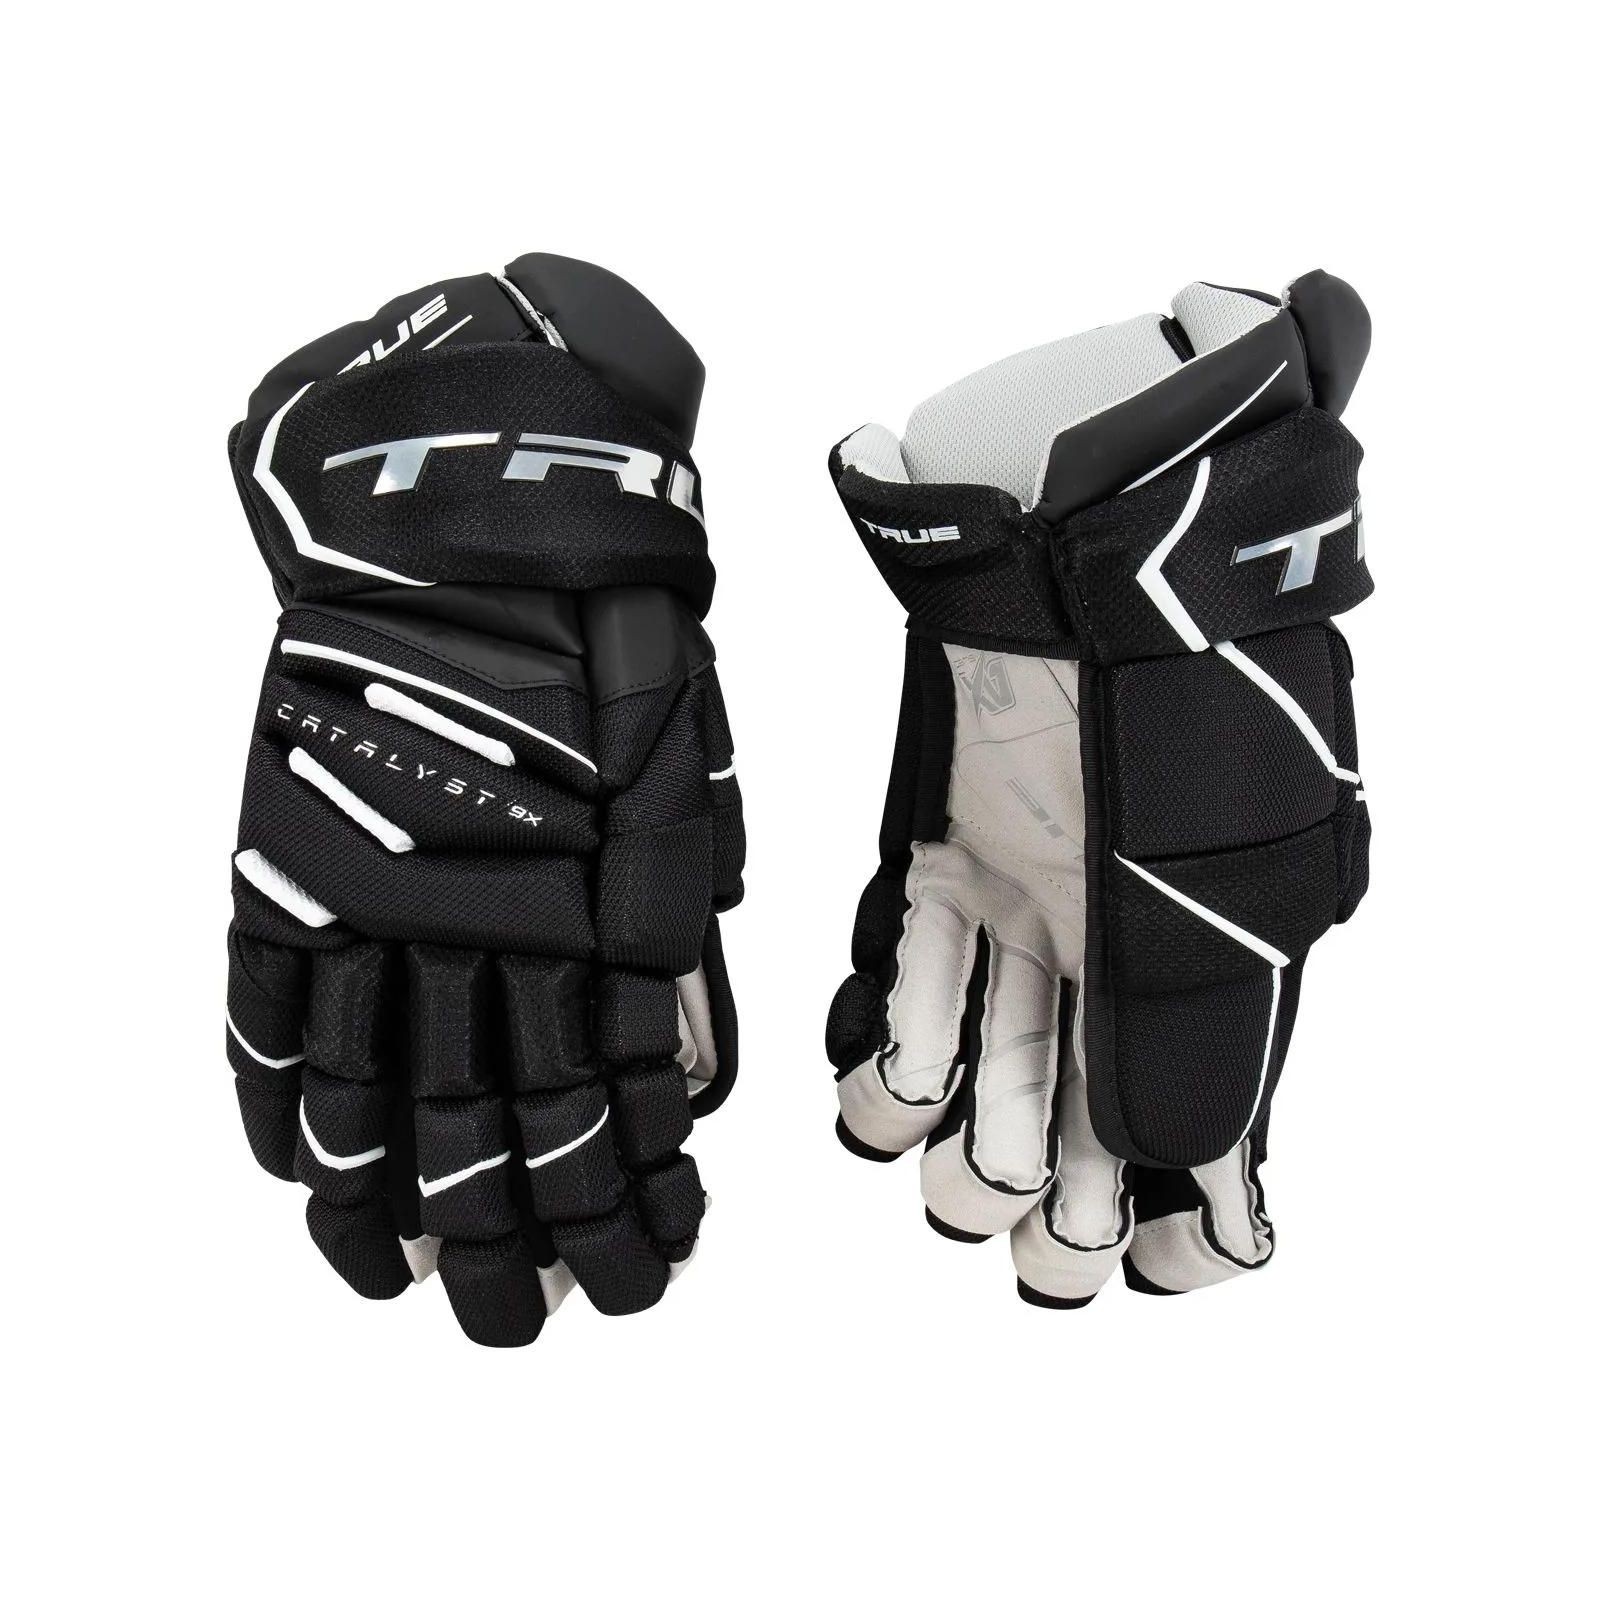 BlackBak and JAMM Ice Hockey Gloves by Tackla Montreal 